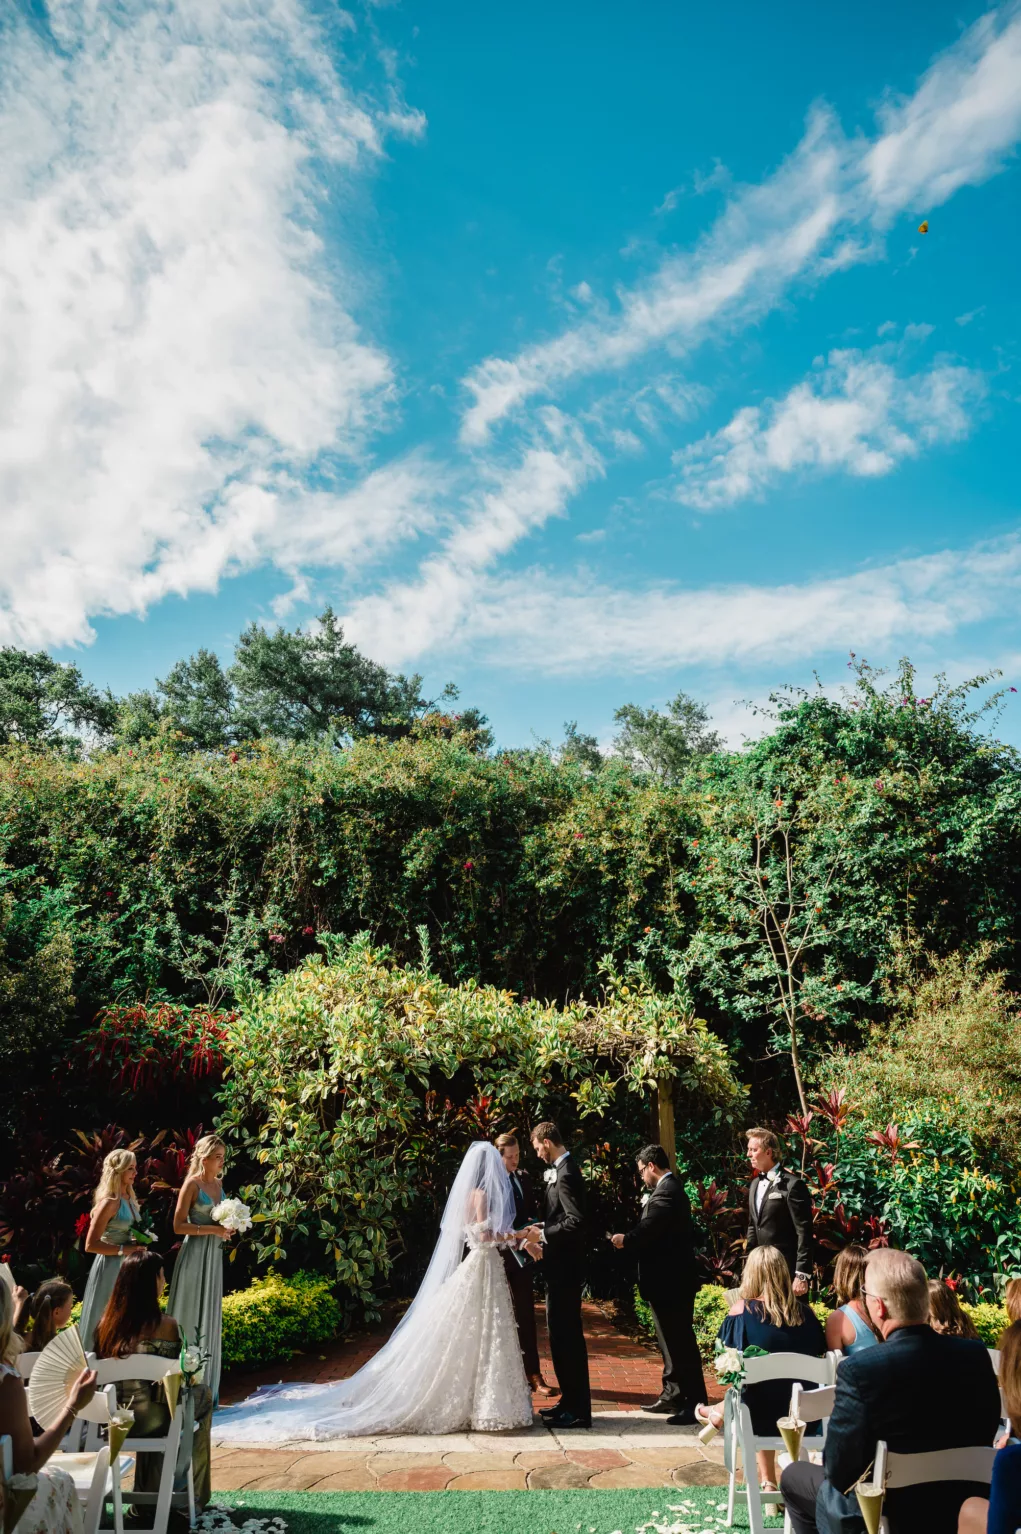 Bride and Groom Garden Wedding Ceremony Decor Inspiration | Venue Sunken Garden | Tampa Photography and Videography Iyrus Weddings